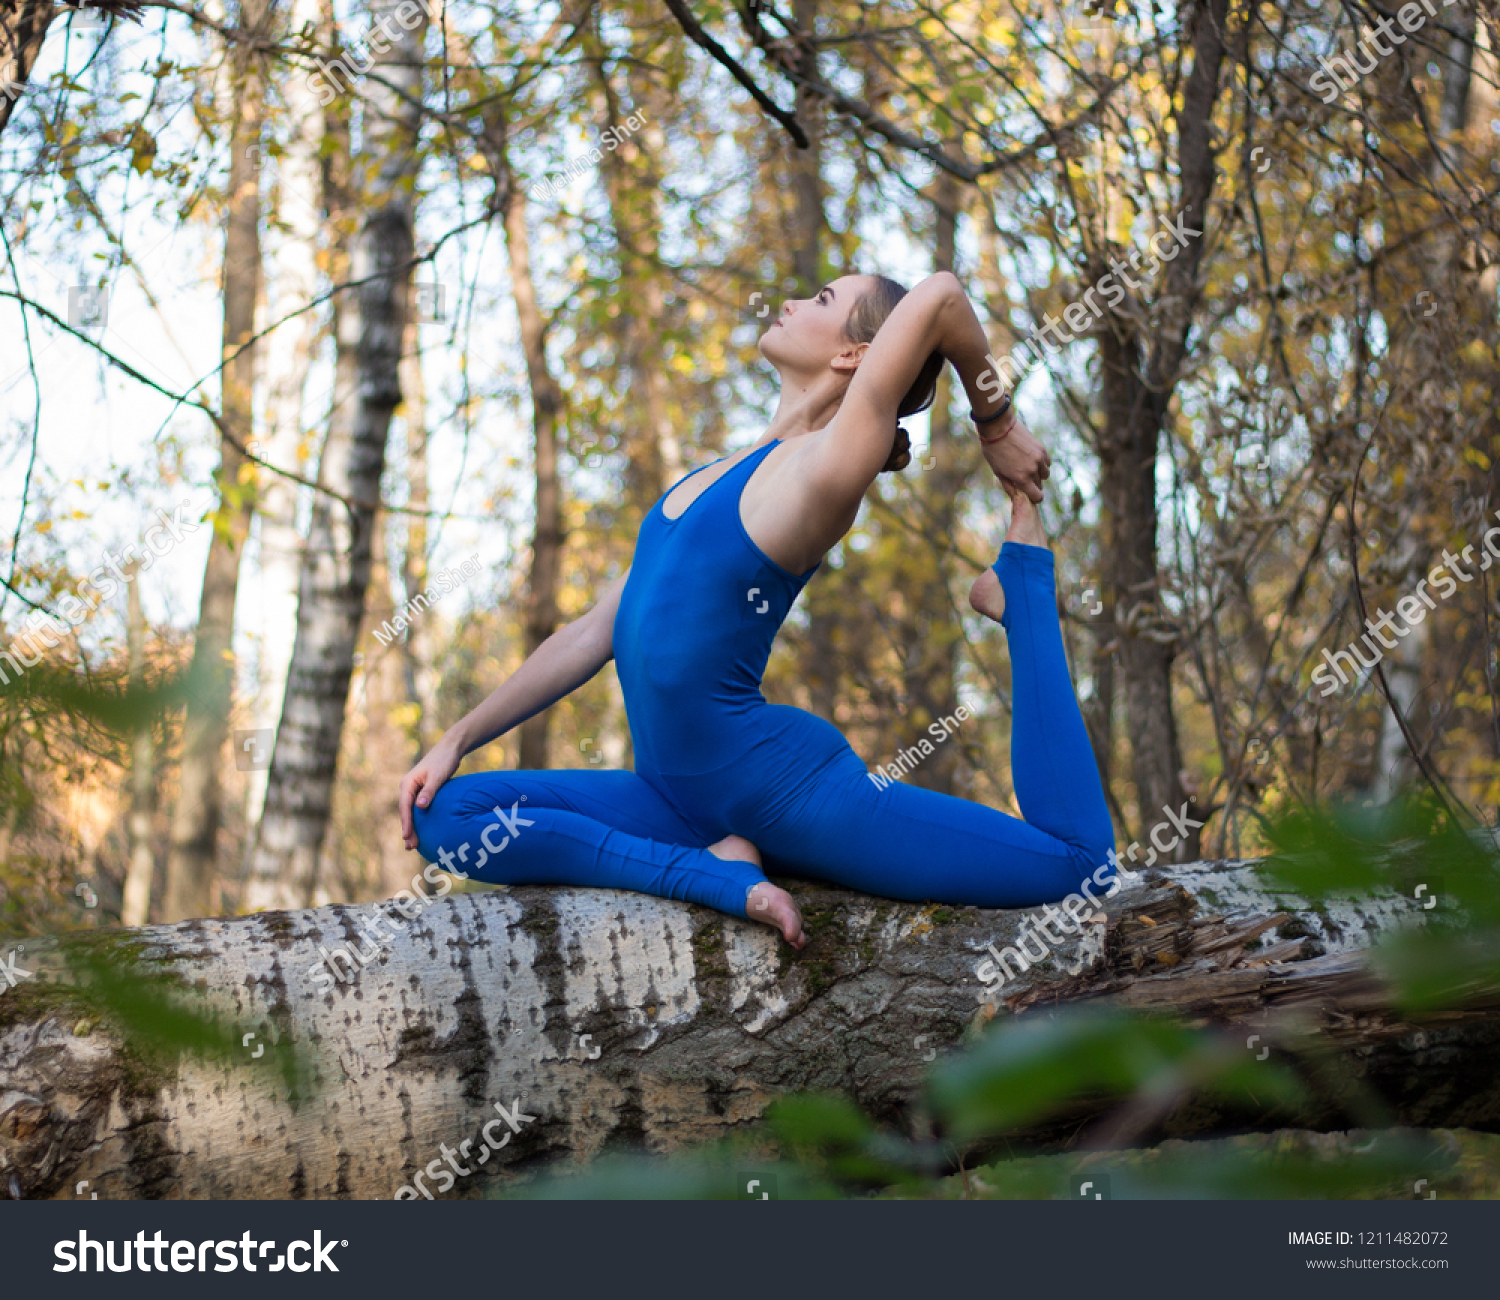 https://image.shutterstock.com/z/stock-photo-girl-sitting-on-the-tree-doing-stretching-1211482072.jpg